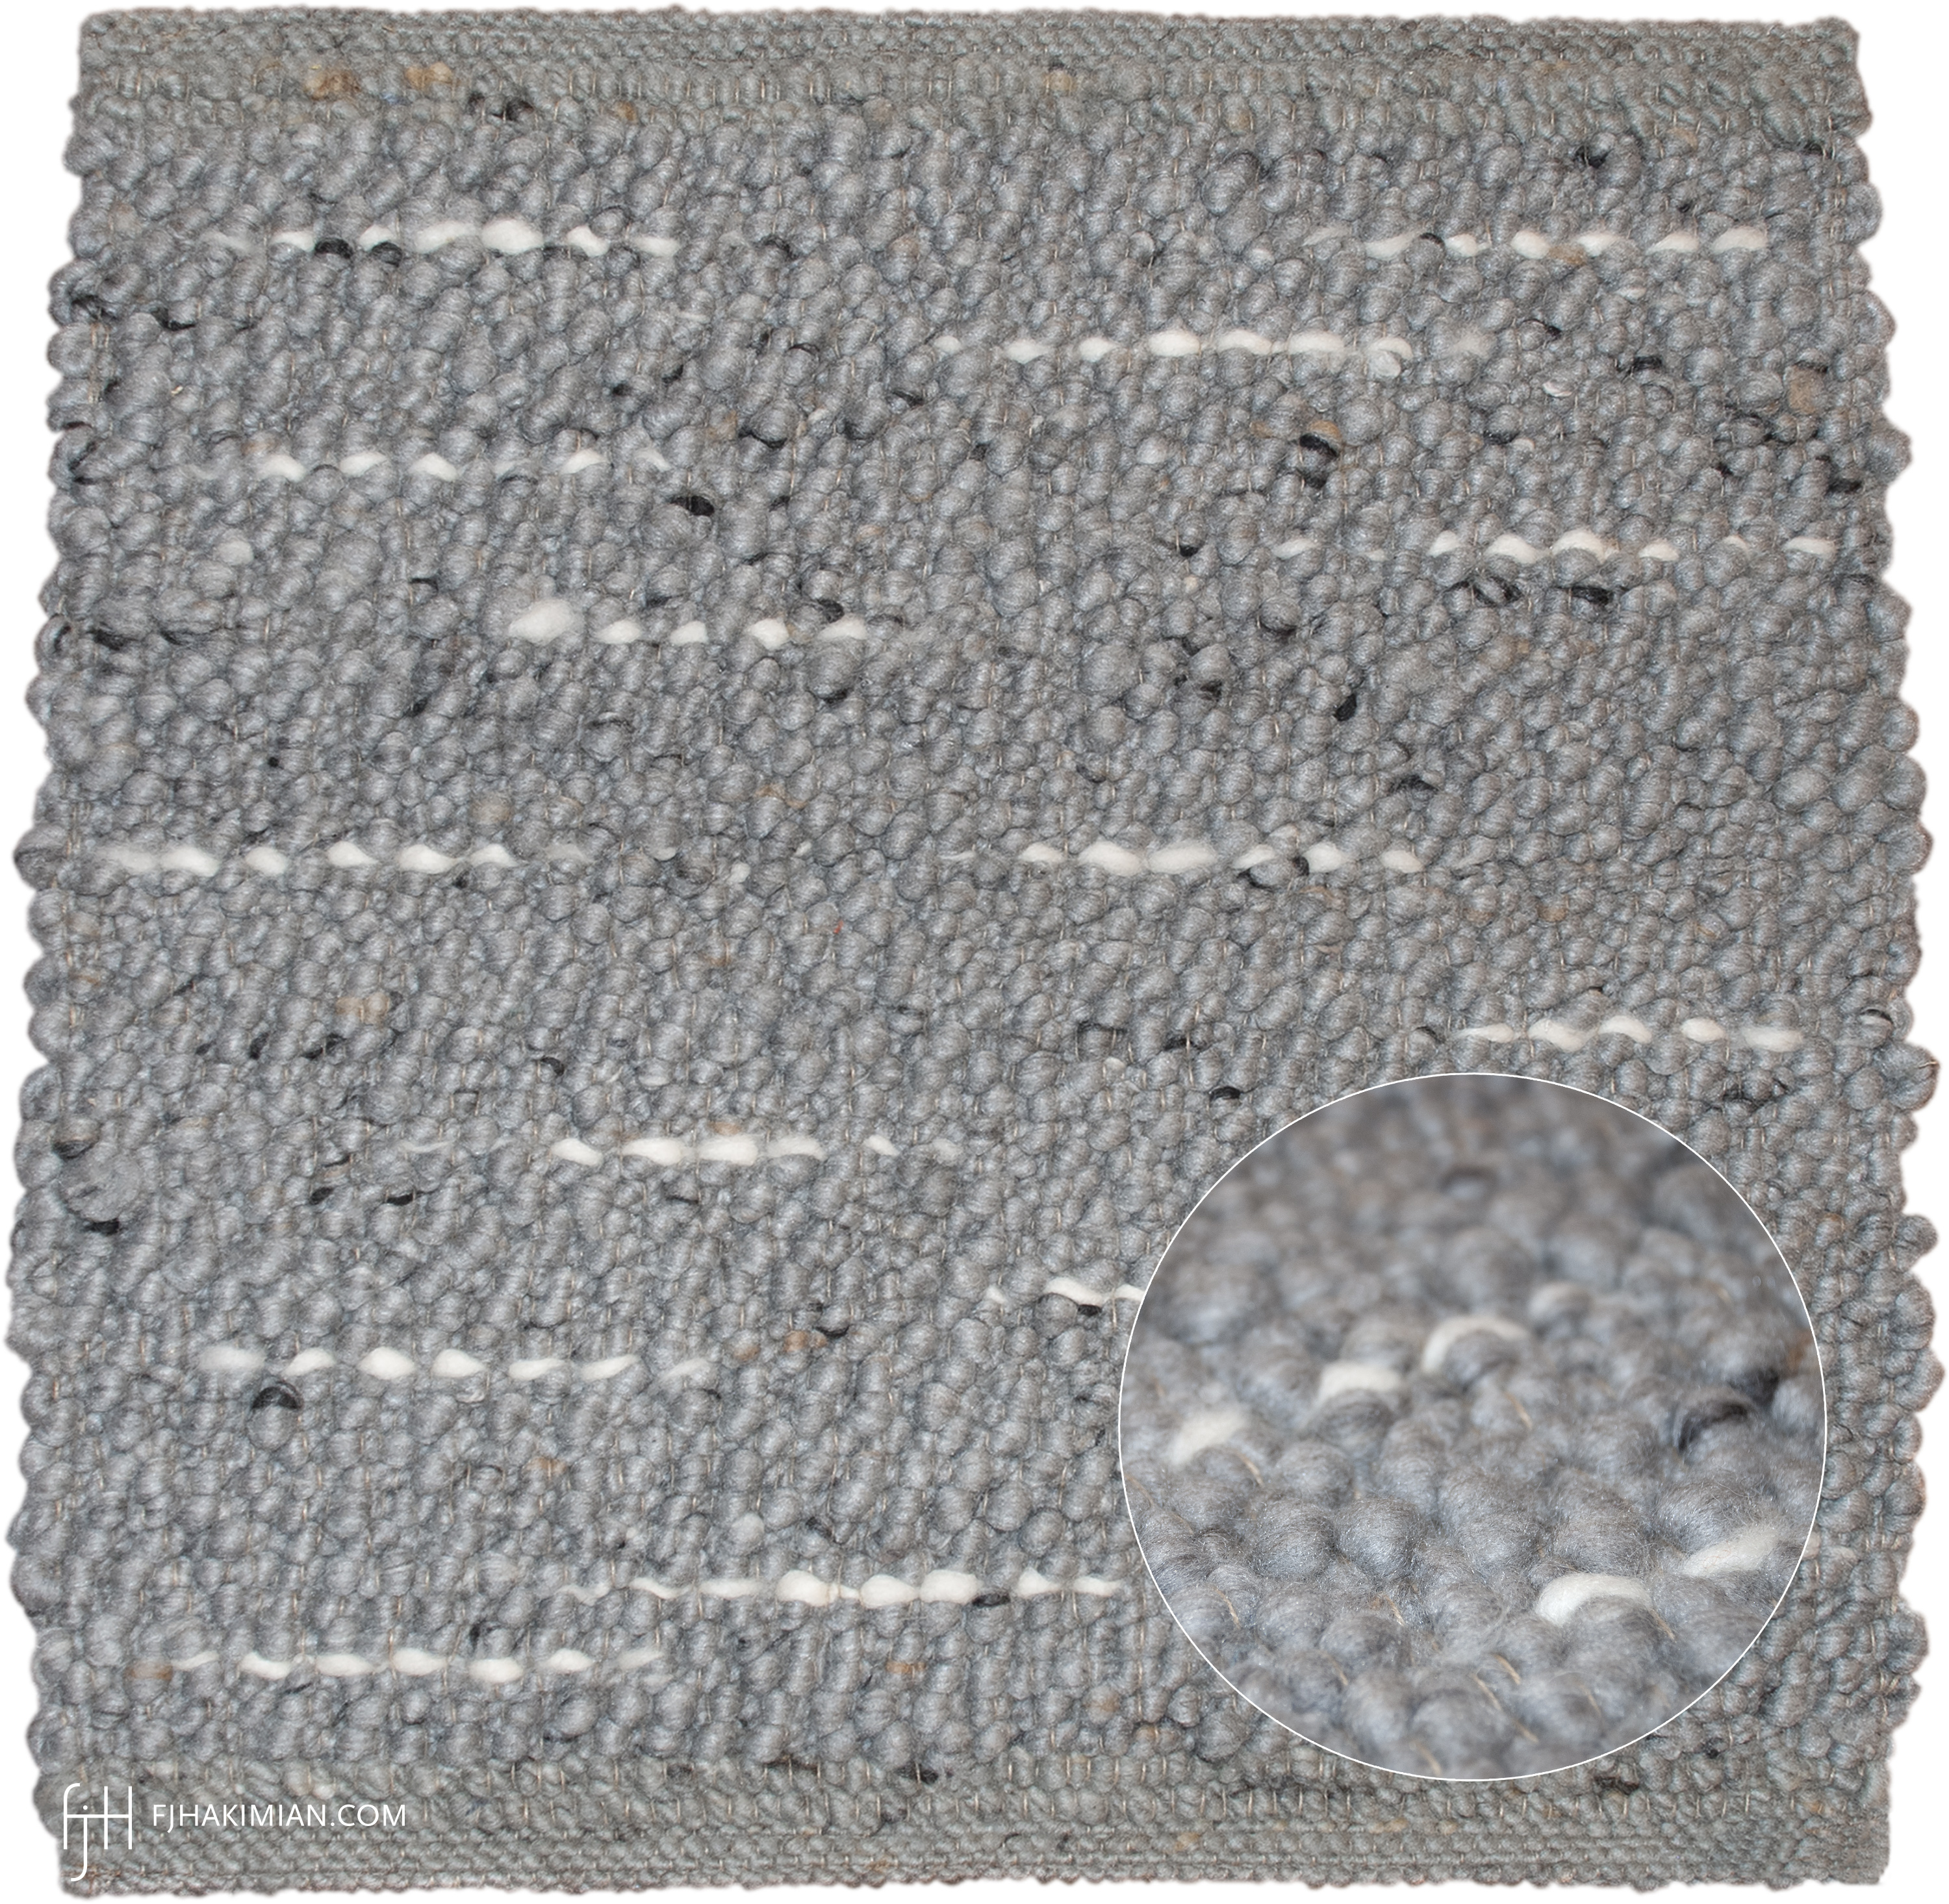 HH-Super Karoo | Custom African Wool Carpet | FJ Hakimian | Carpet Gallery in NYC